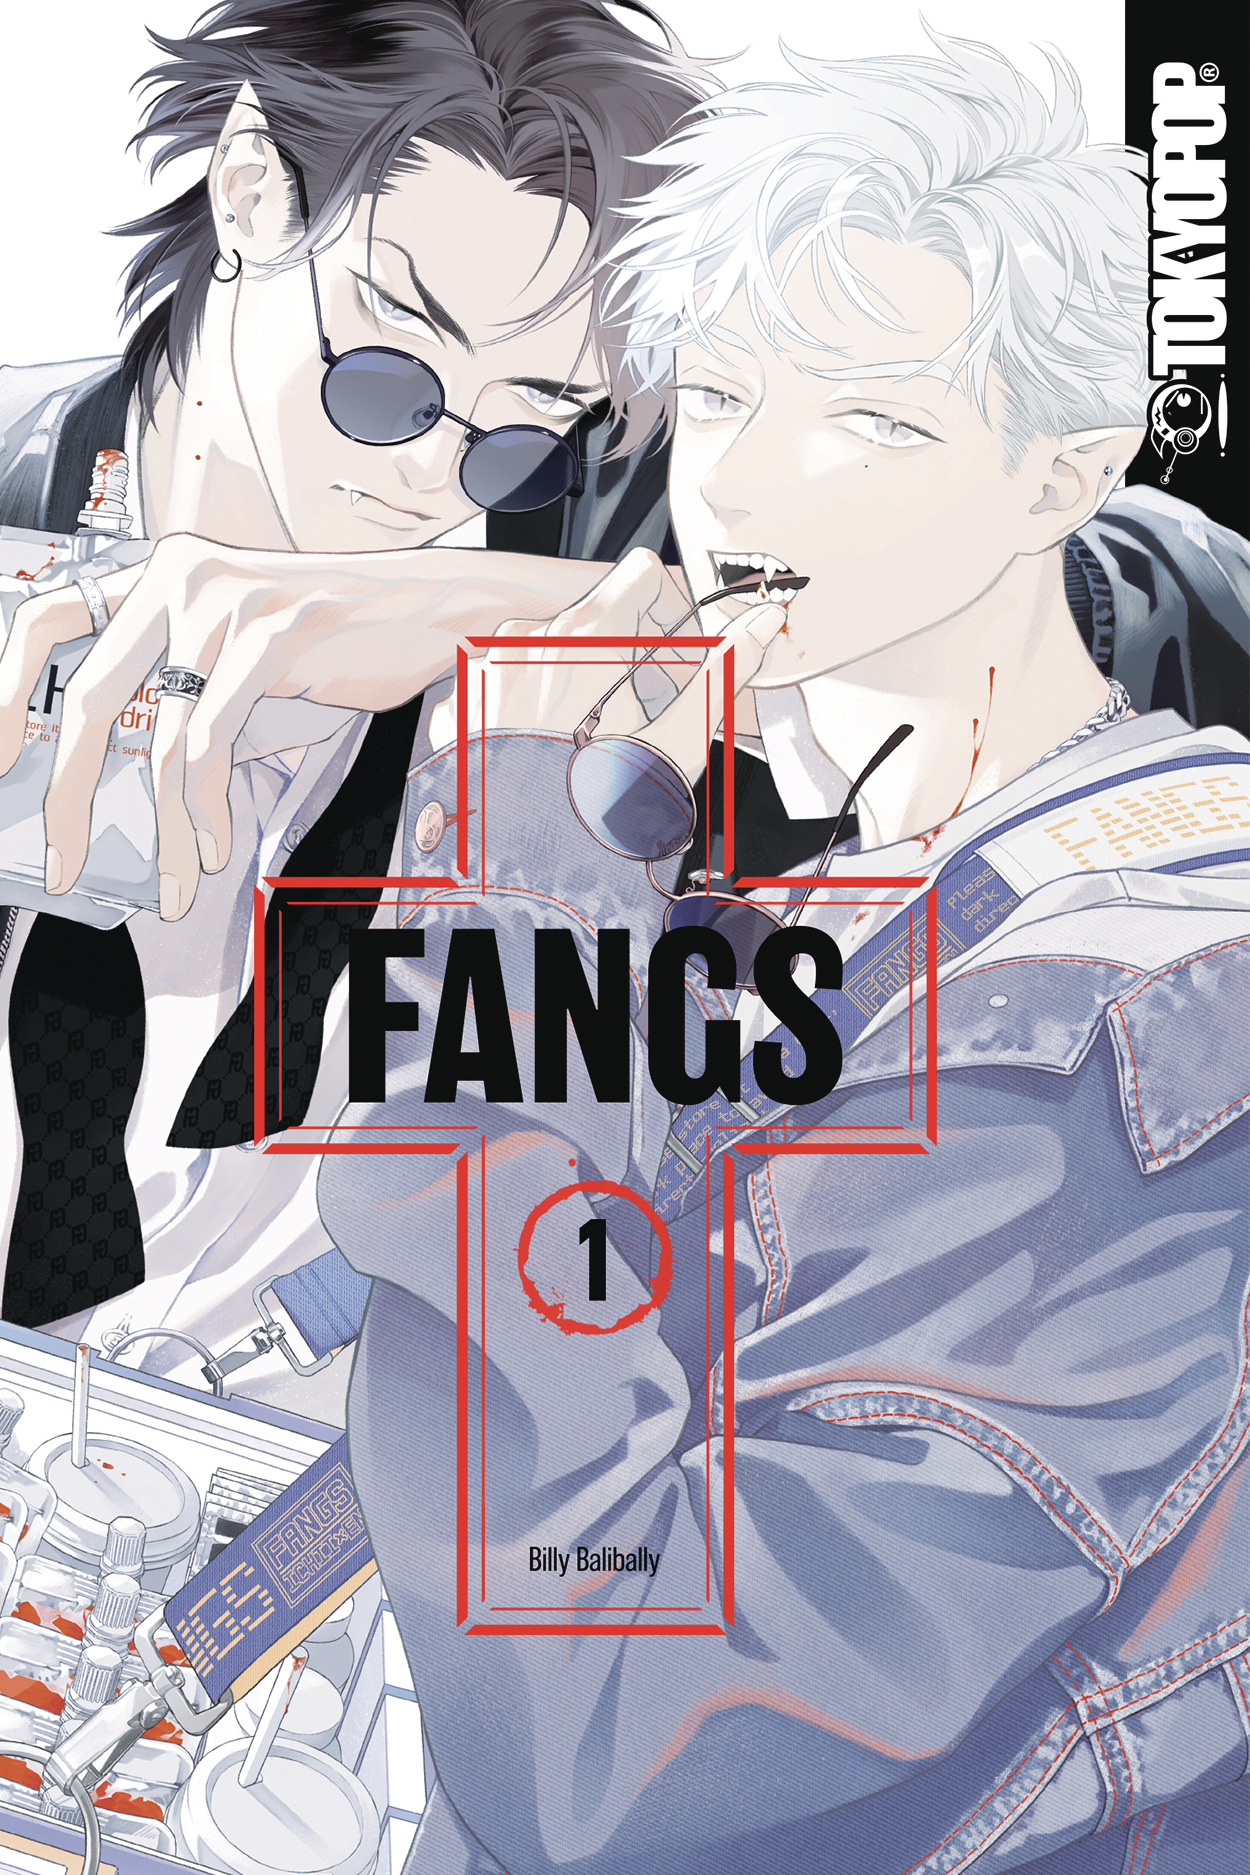 Fangs Manga Volume 1 (Mature)